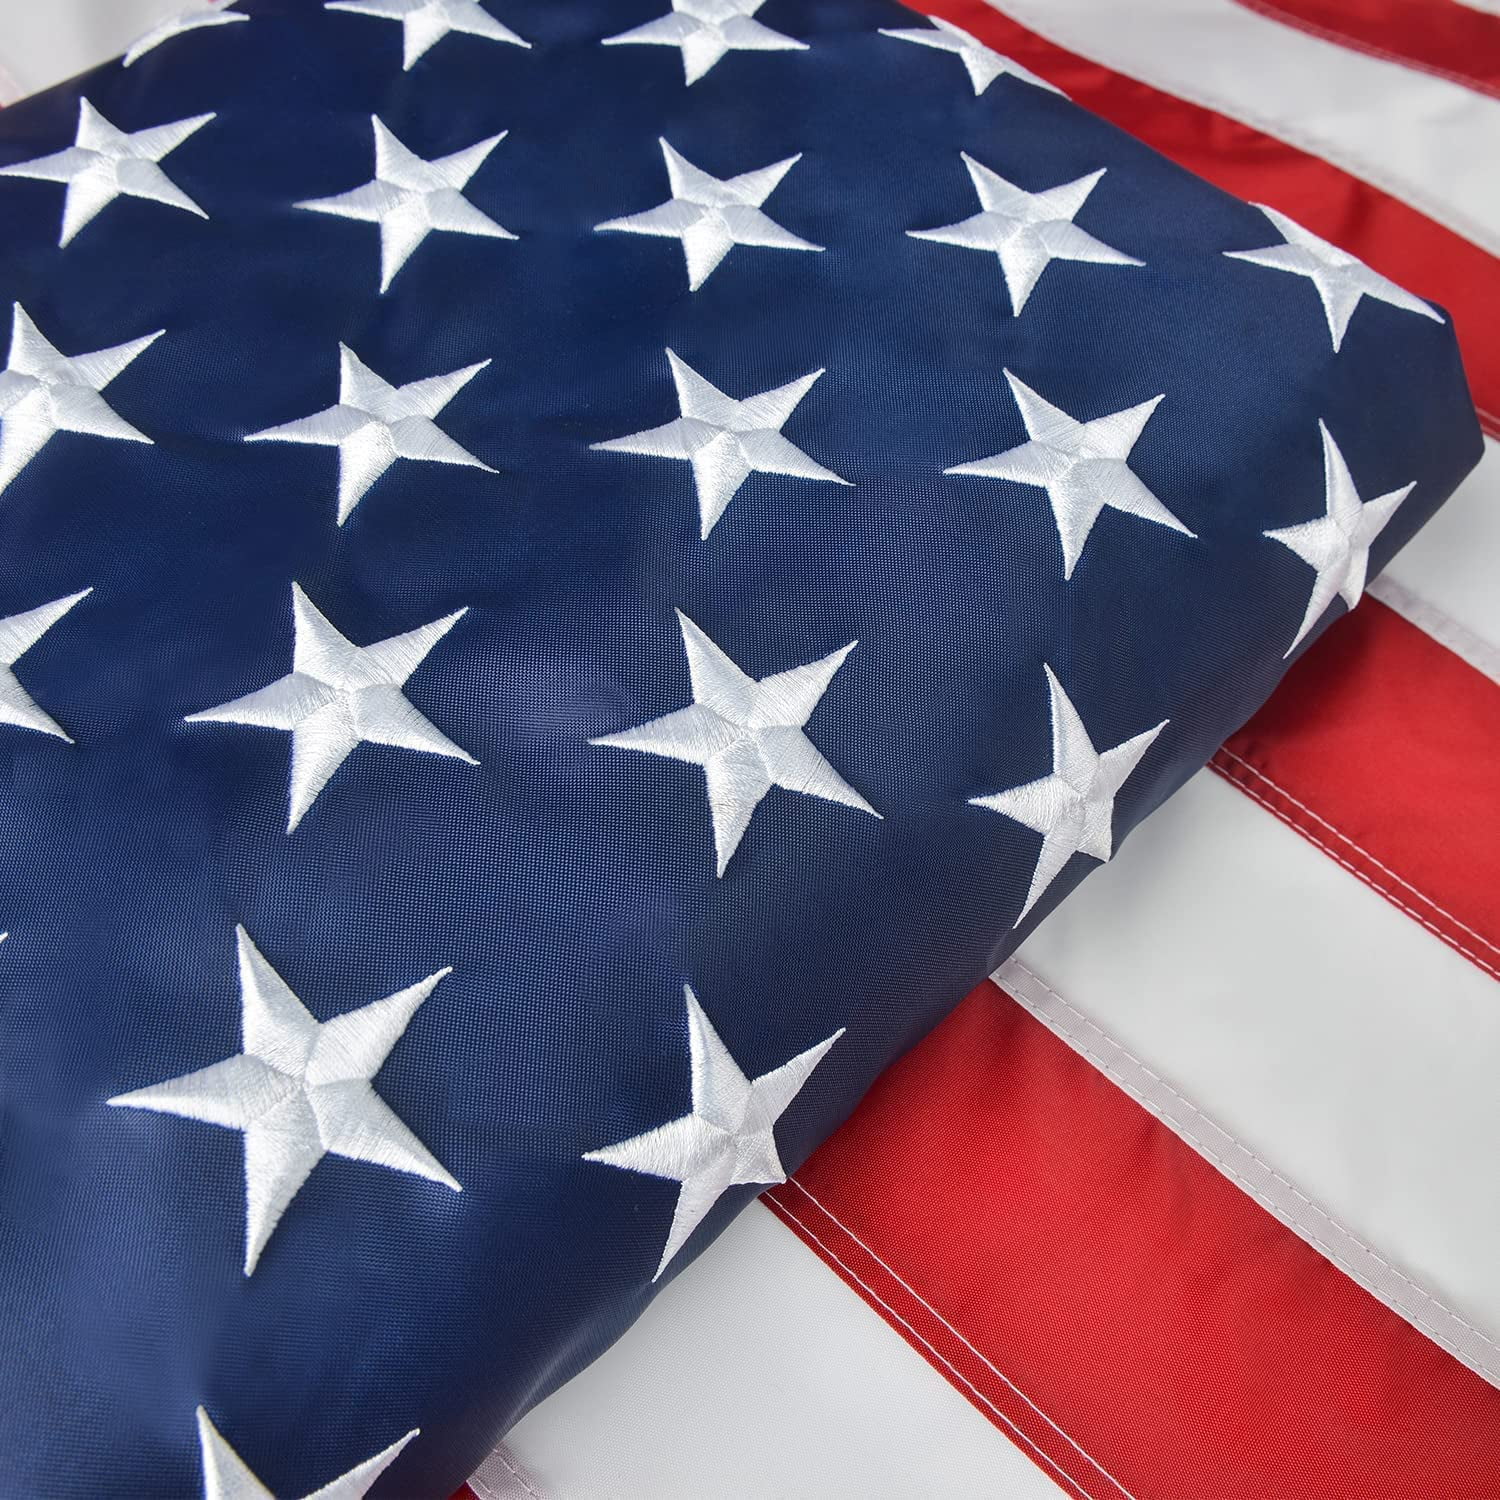 minnan 5*3FT American Flag Grommets USA Polyster Flag Courtyard